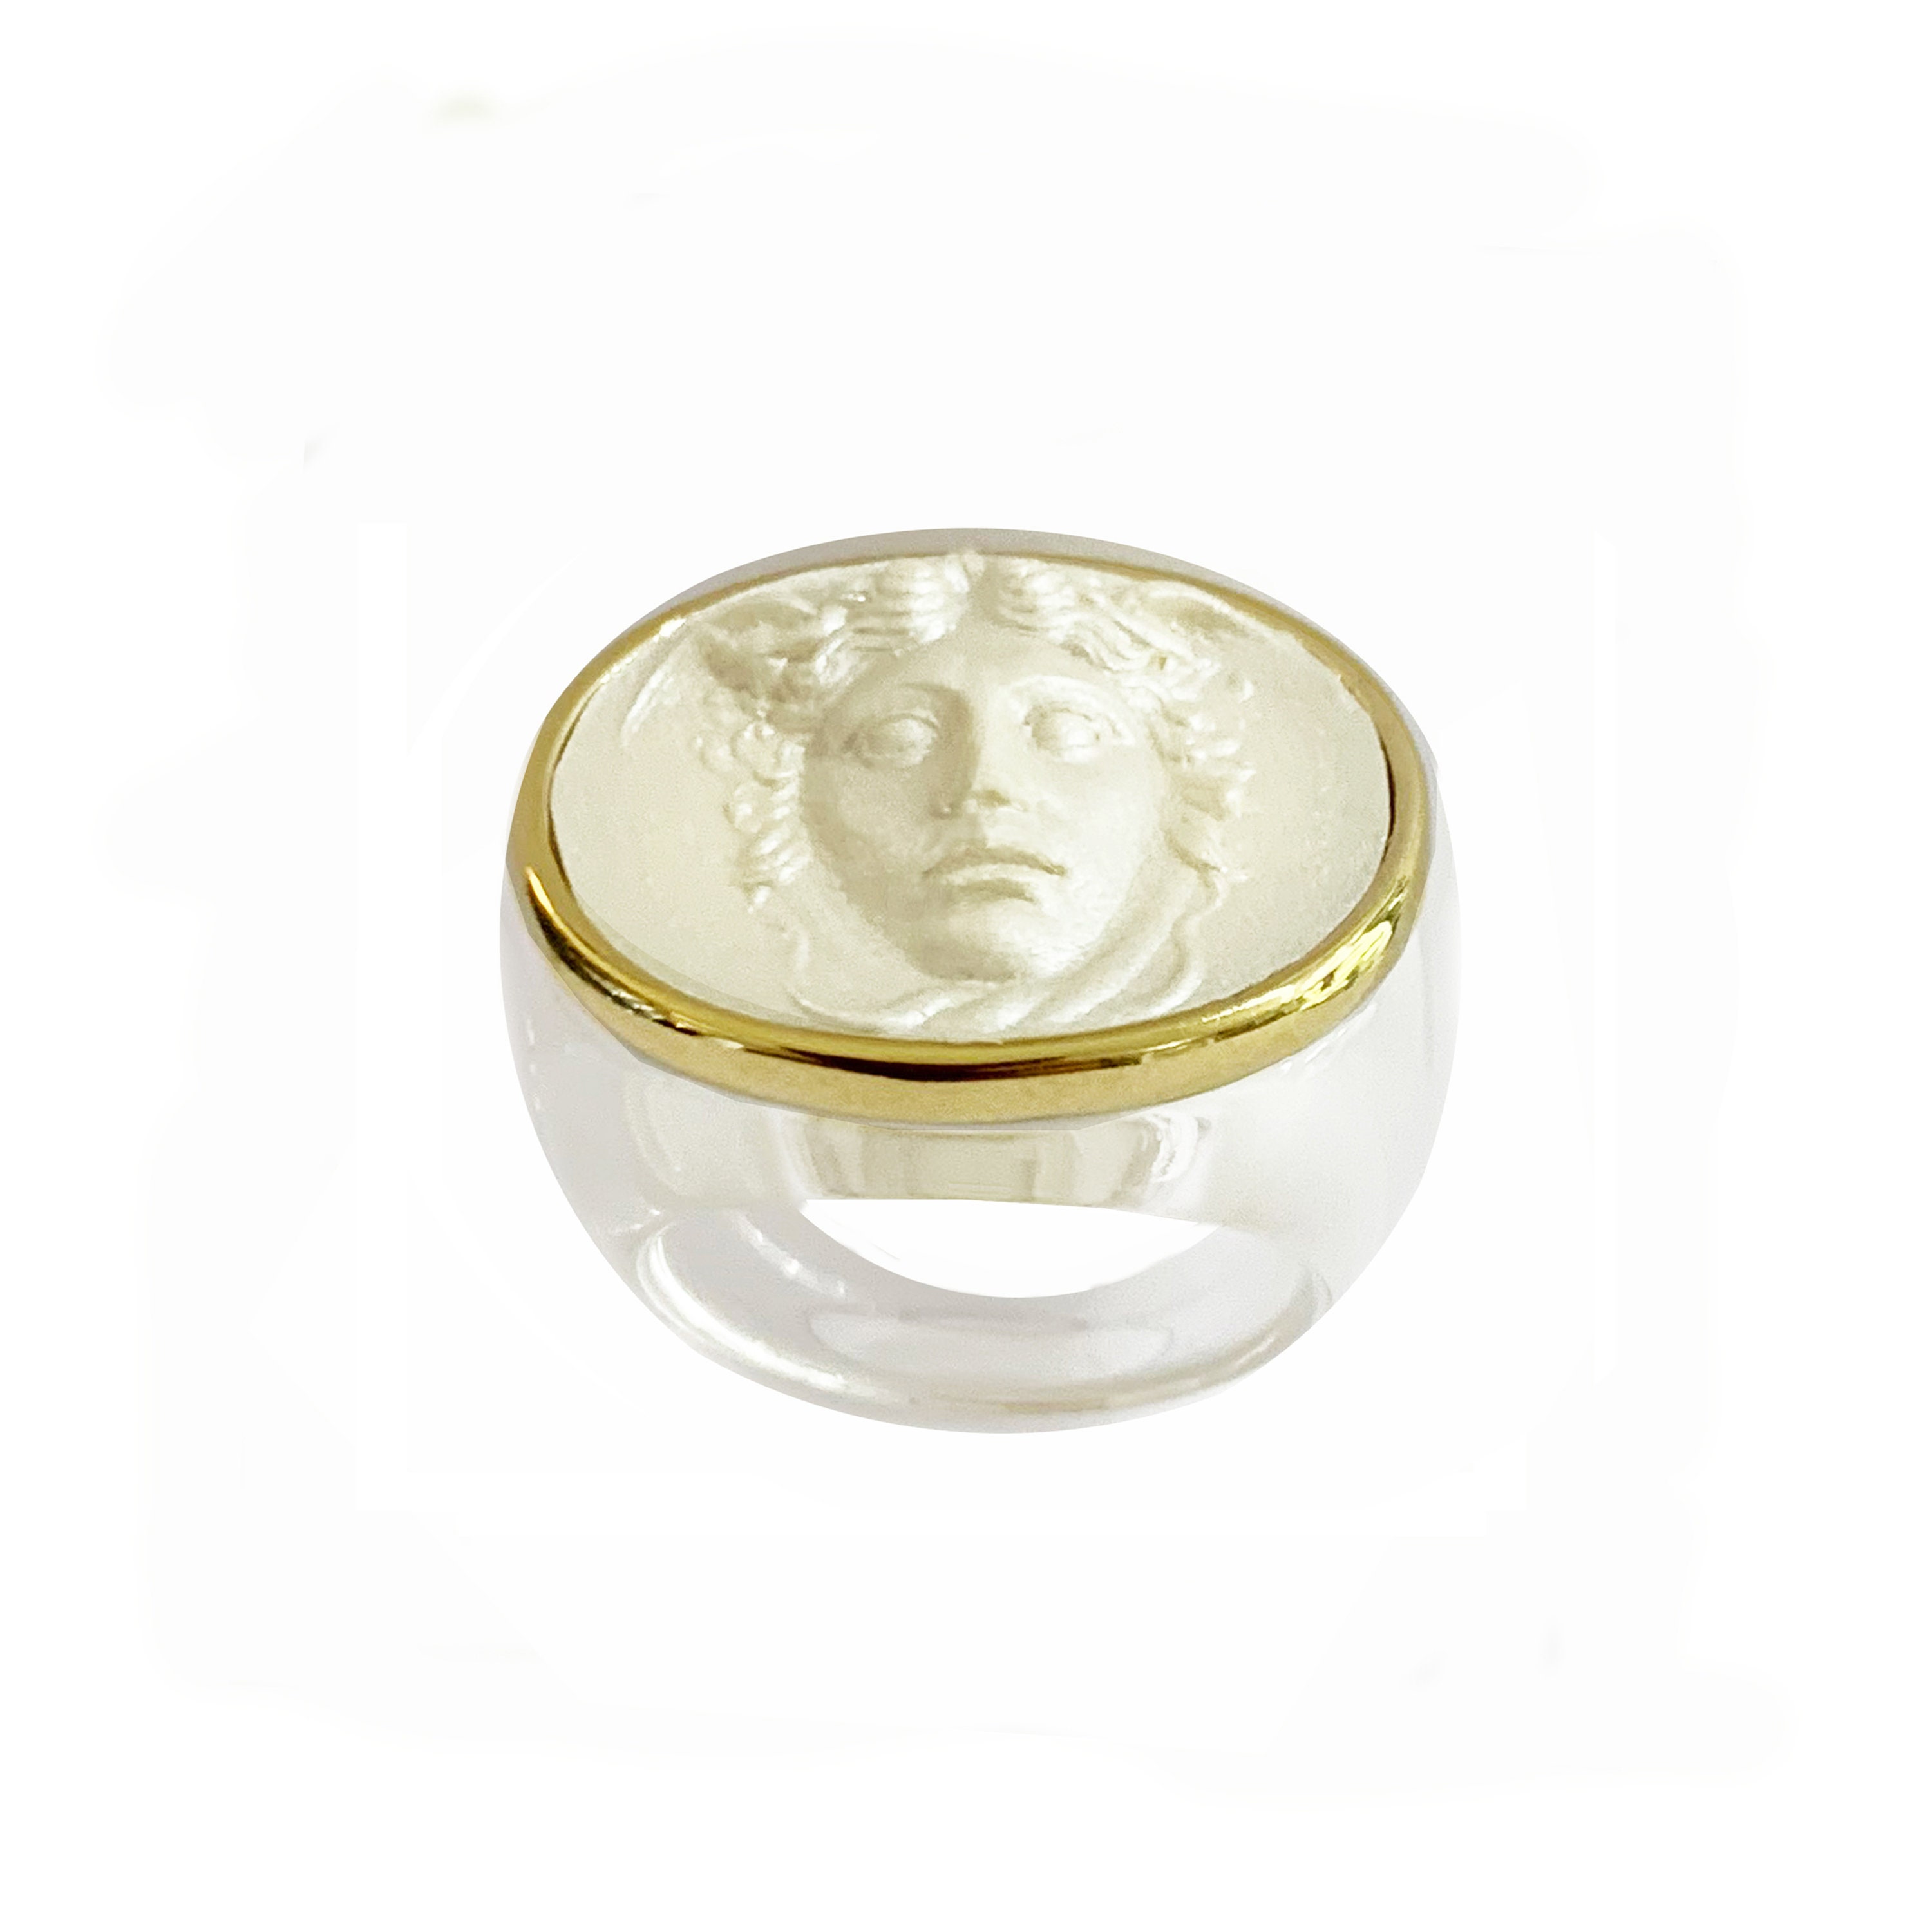 versace wedding ring gold 18k: Buy Online at Best Price in UAE - Amazon.ae